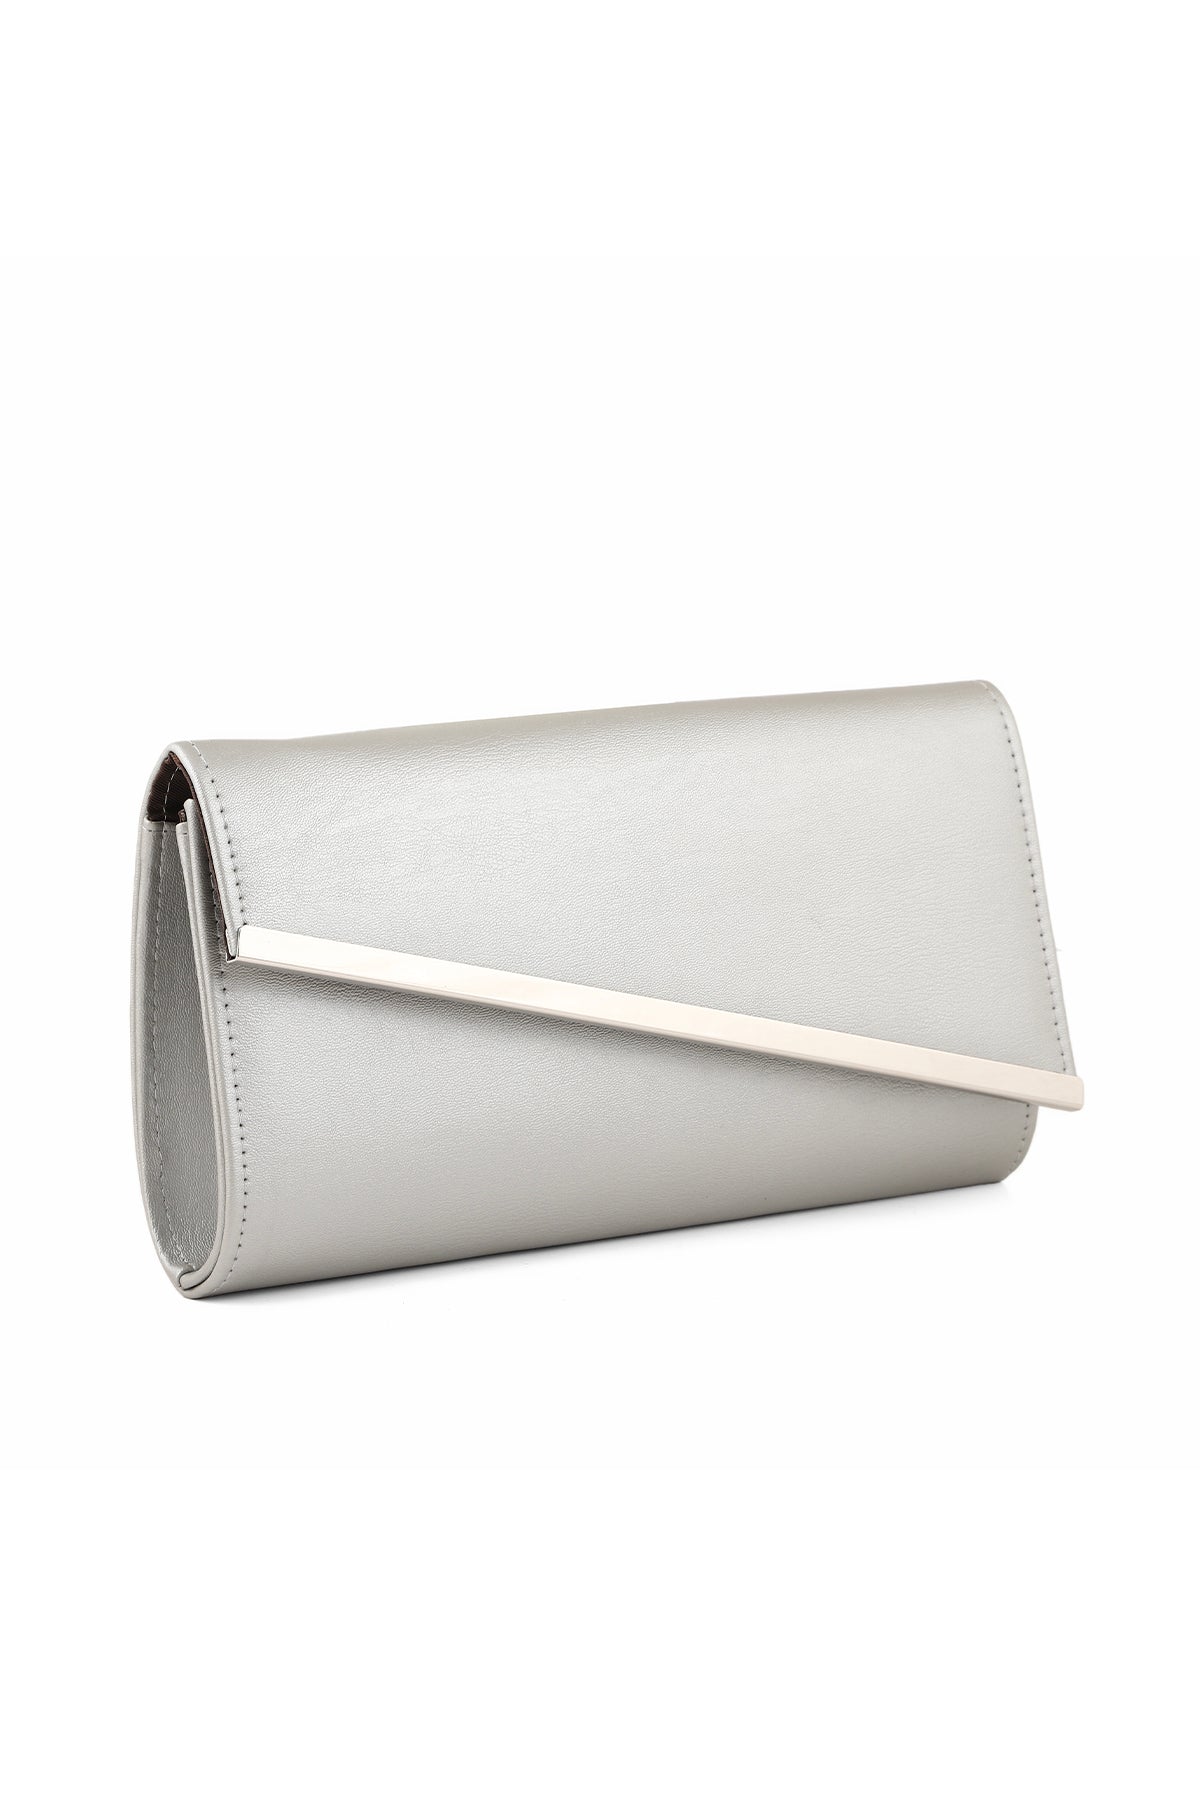 Flap Shoulder Bags B20753-Silver – Insignia PK